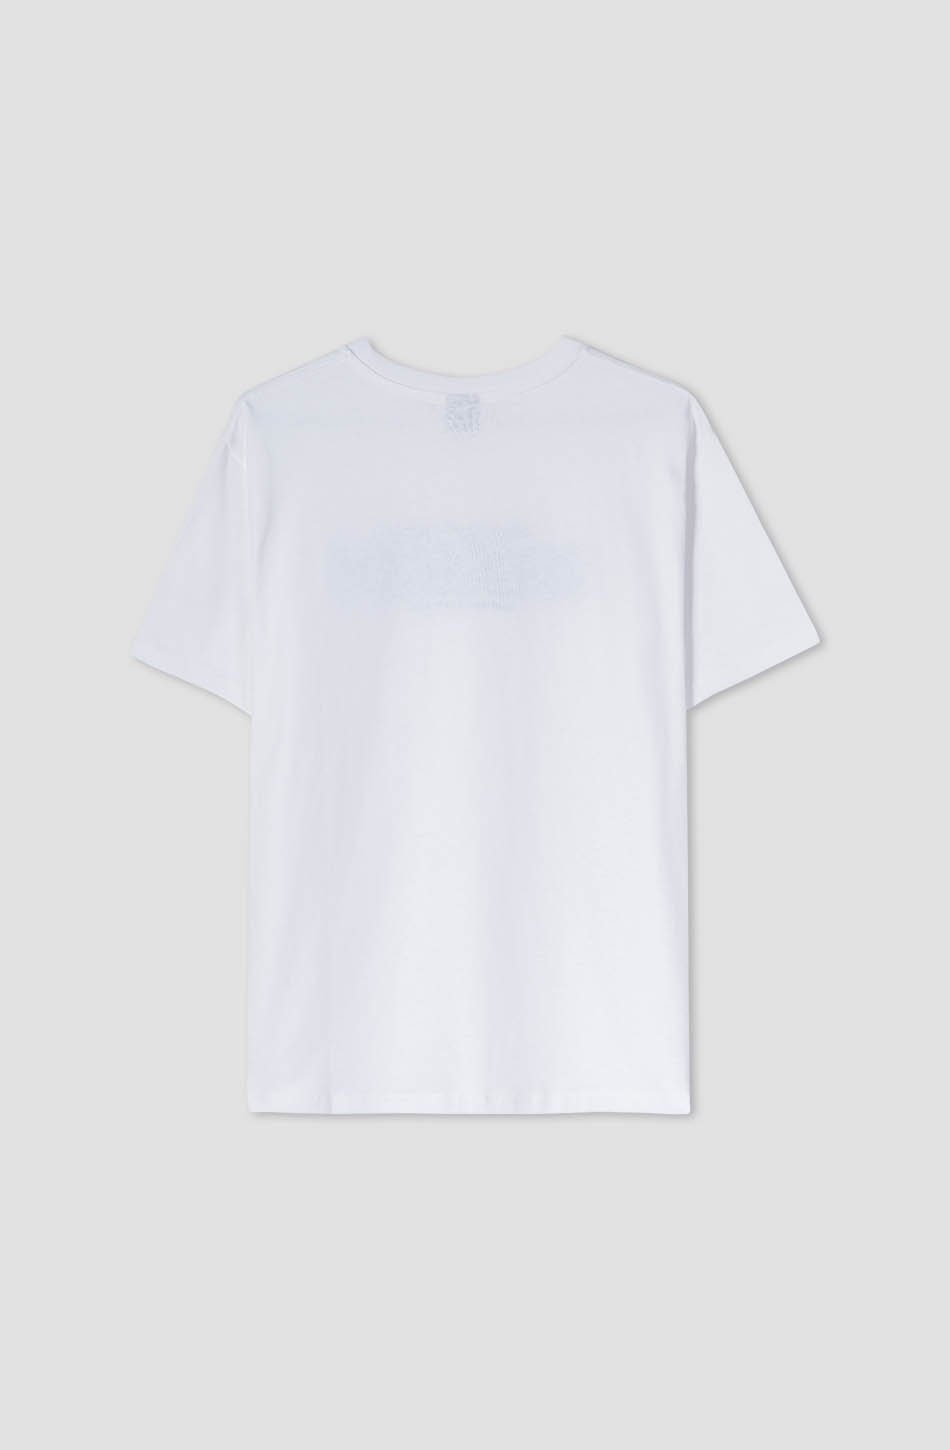 White Heretics Passion Organic Cotton T-shirt